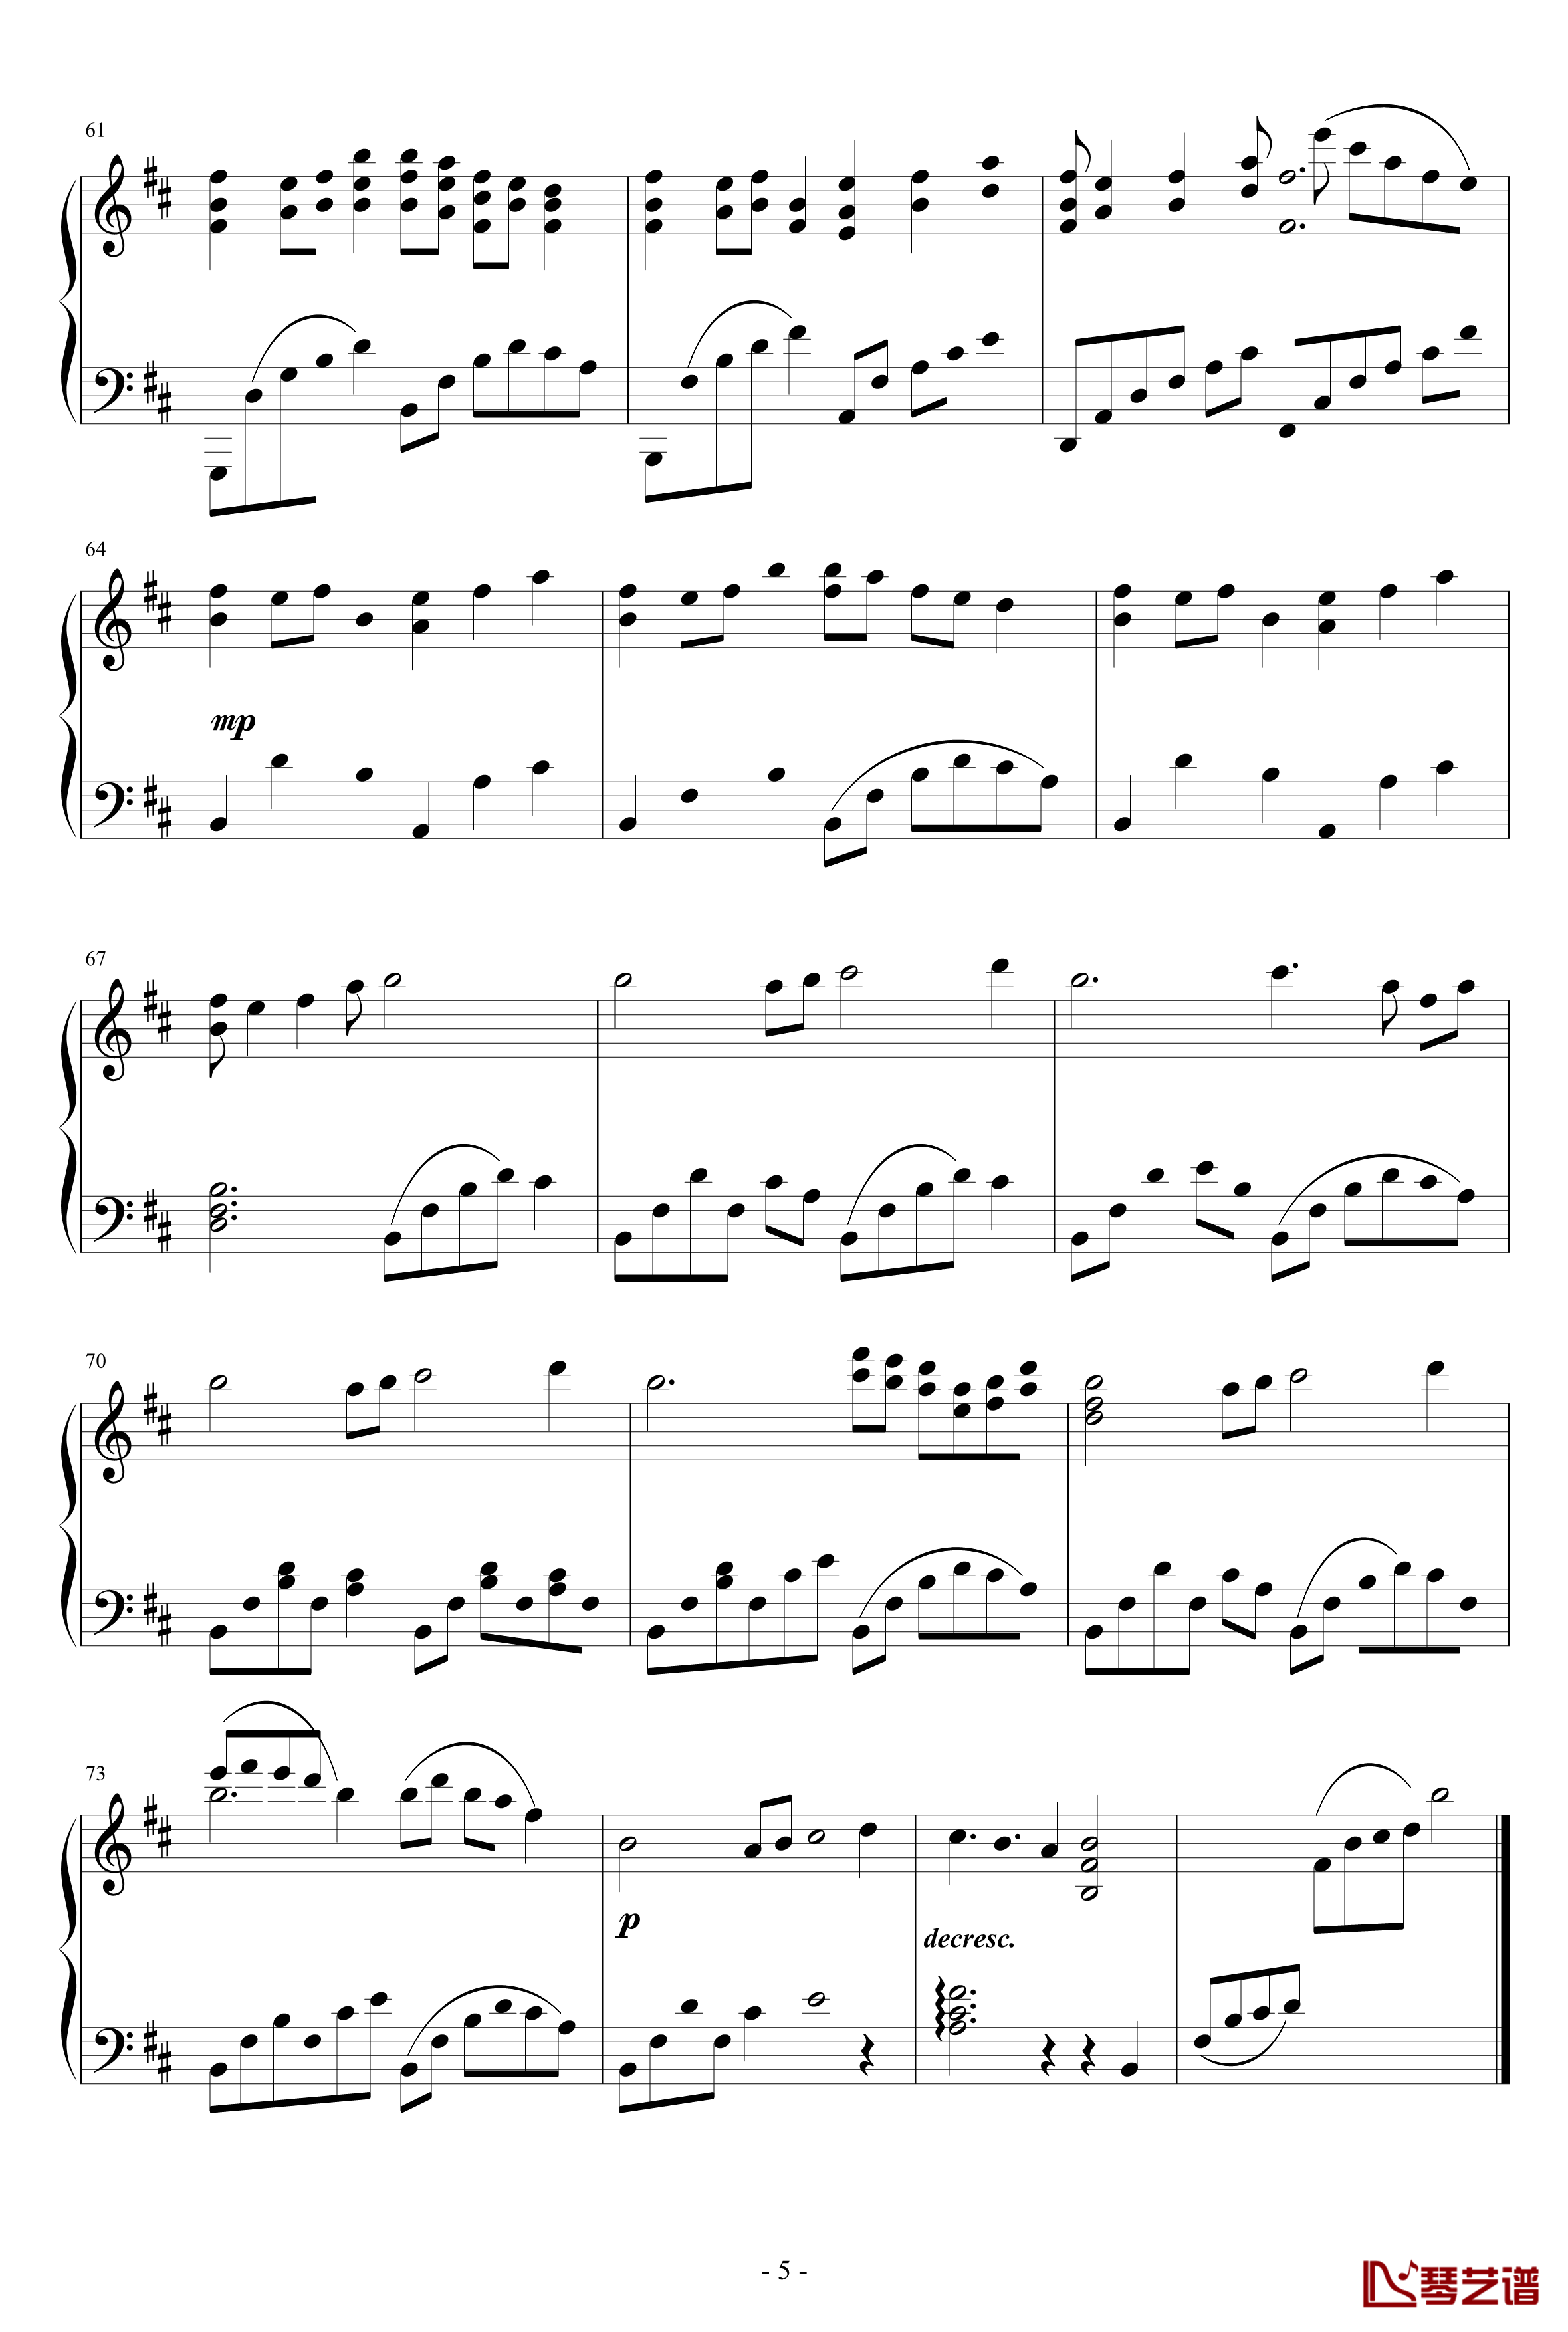 Paleoville's Higan钢琴谱-四目神5